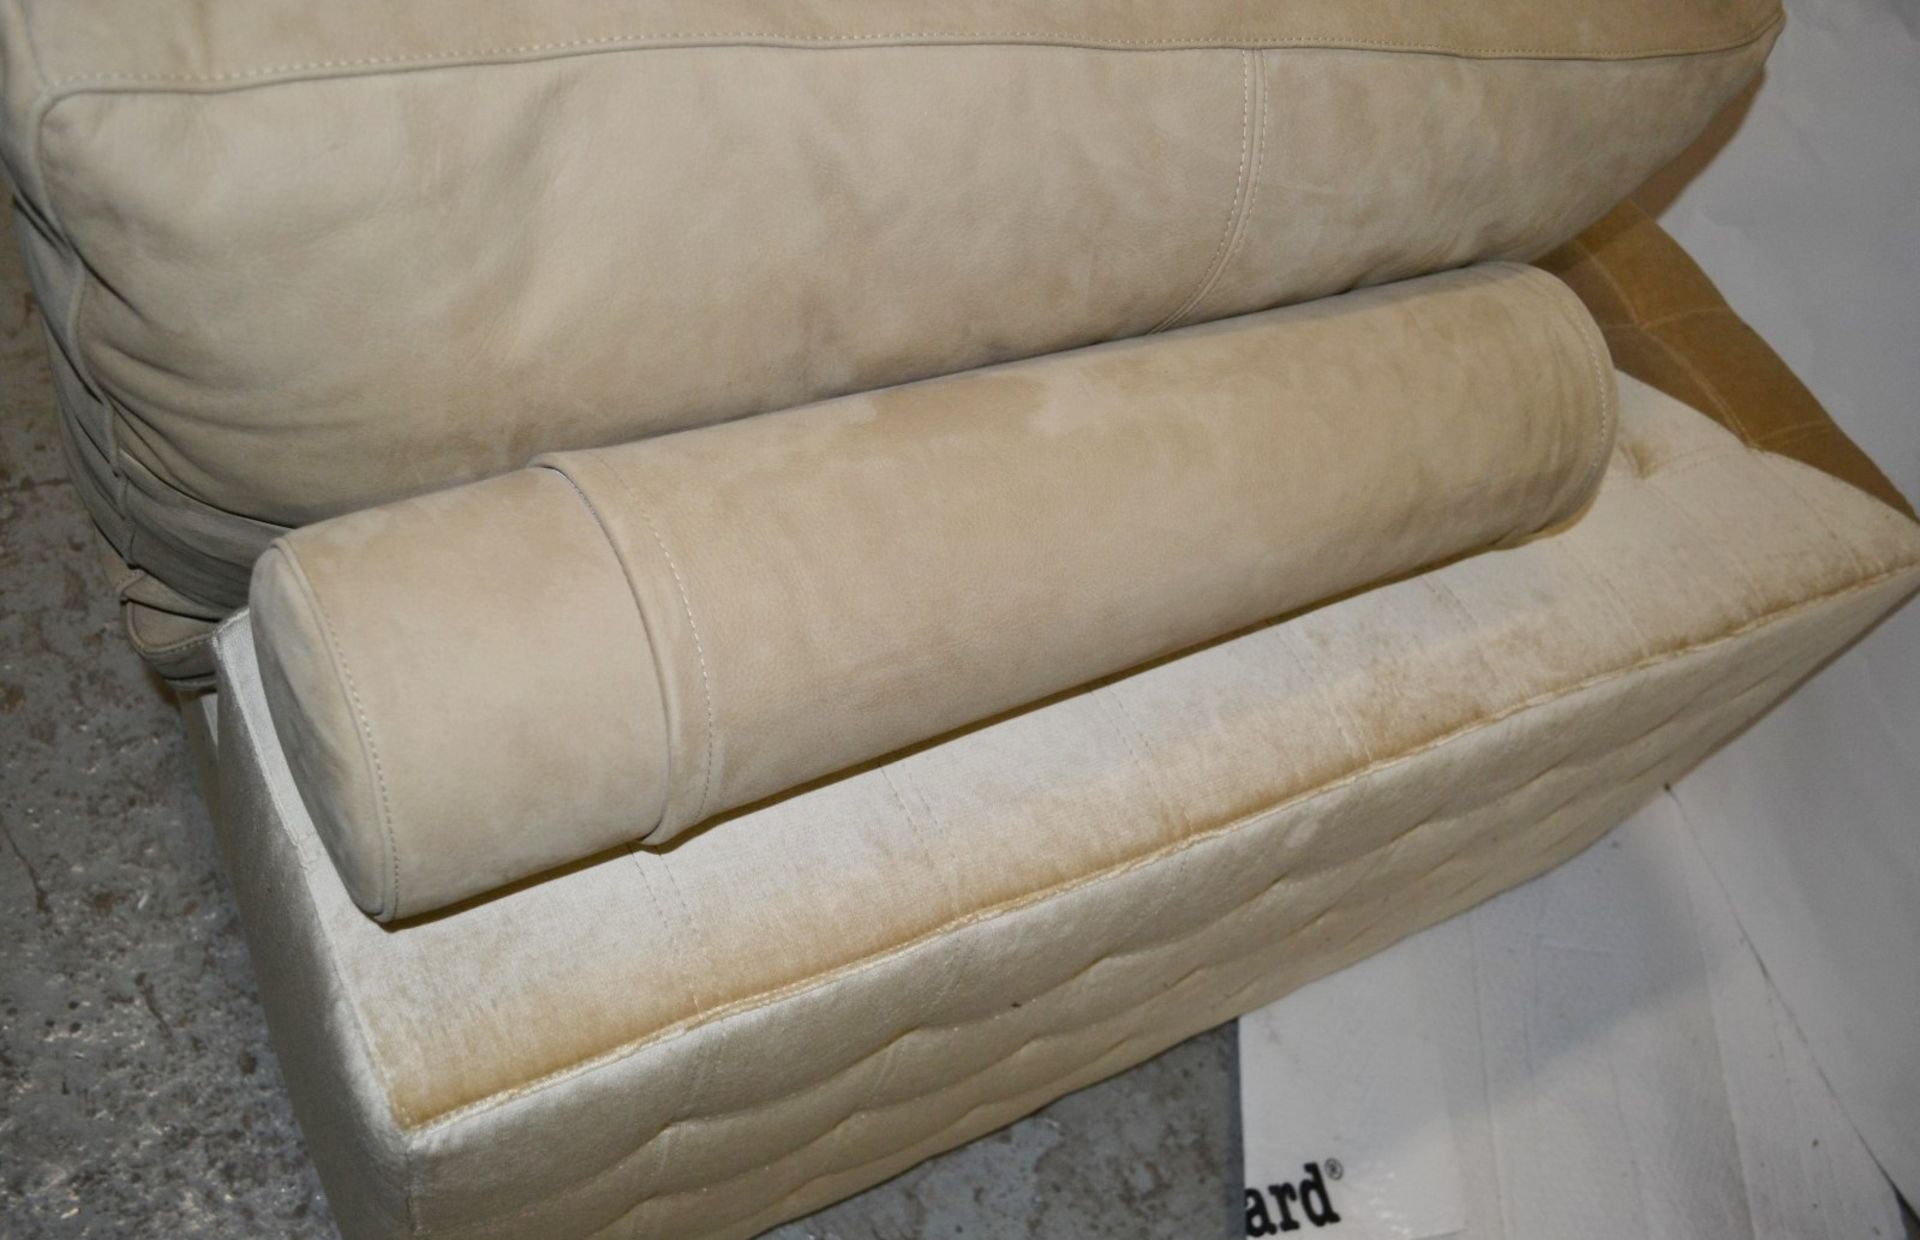 1 x GIORGIO Lifetime "Sayonara" Sectional Sofa Module (Sx132) - Upholstered In Camel-coloured Nubuck - Image 5 of 10